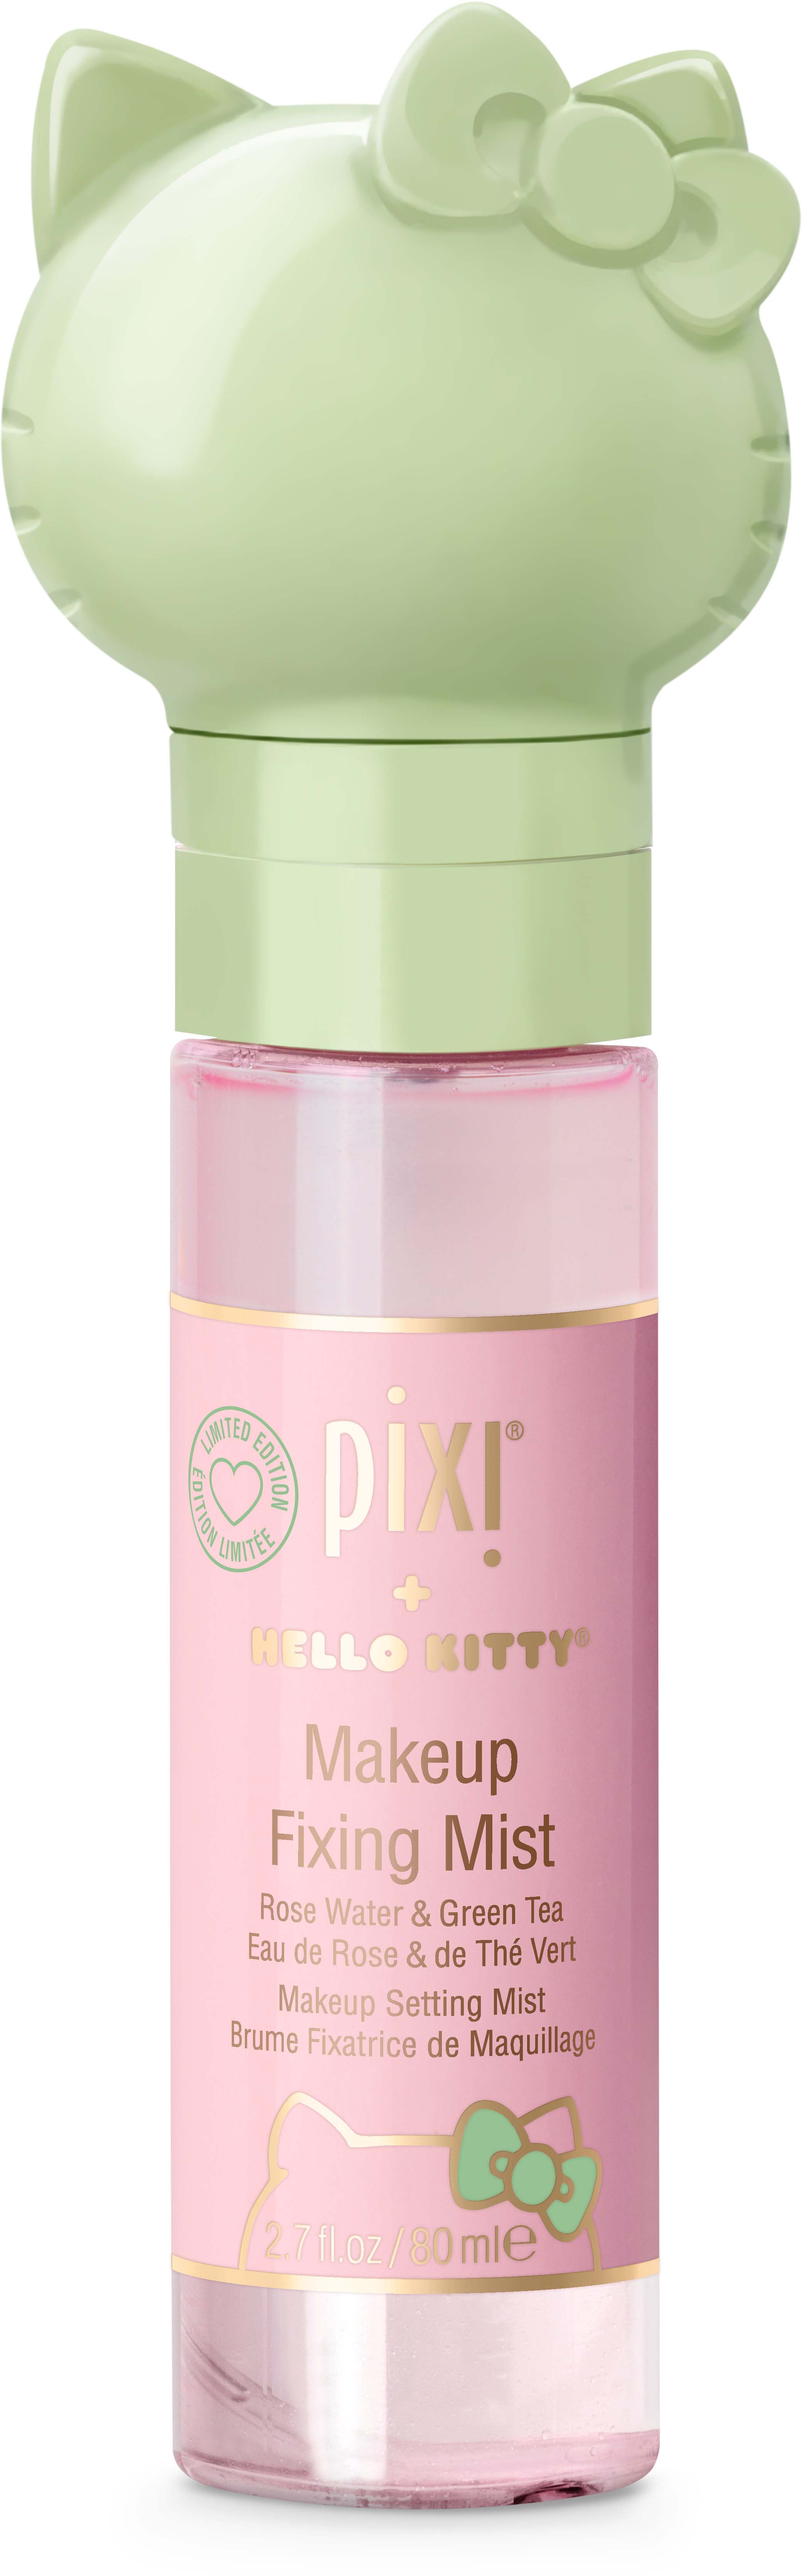 PIXI Pixi + Hello - Makeup Fixing Mist ml | lyko.com